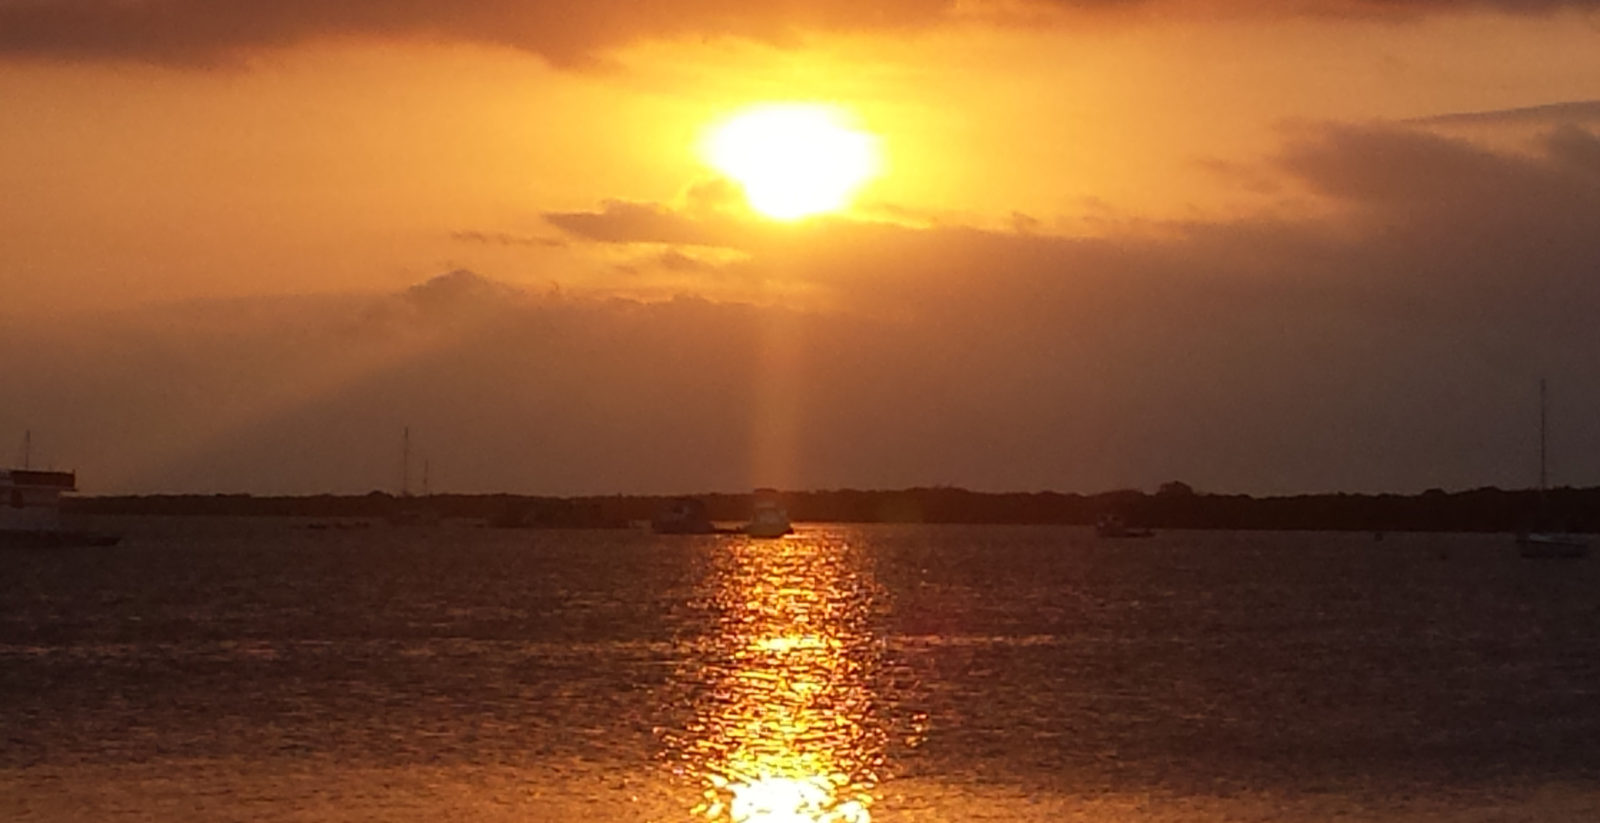 Sunset at Key West